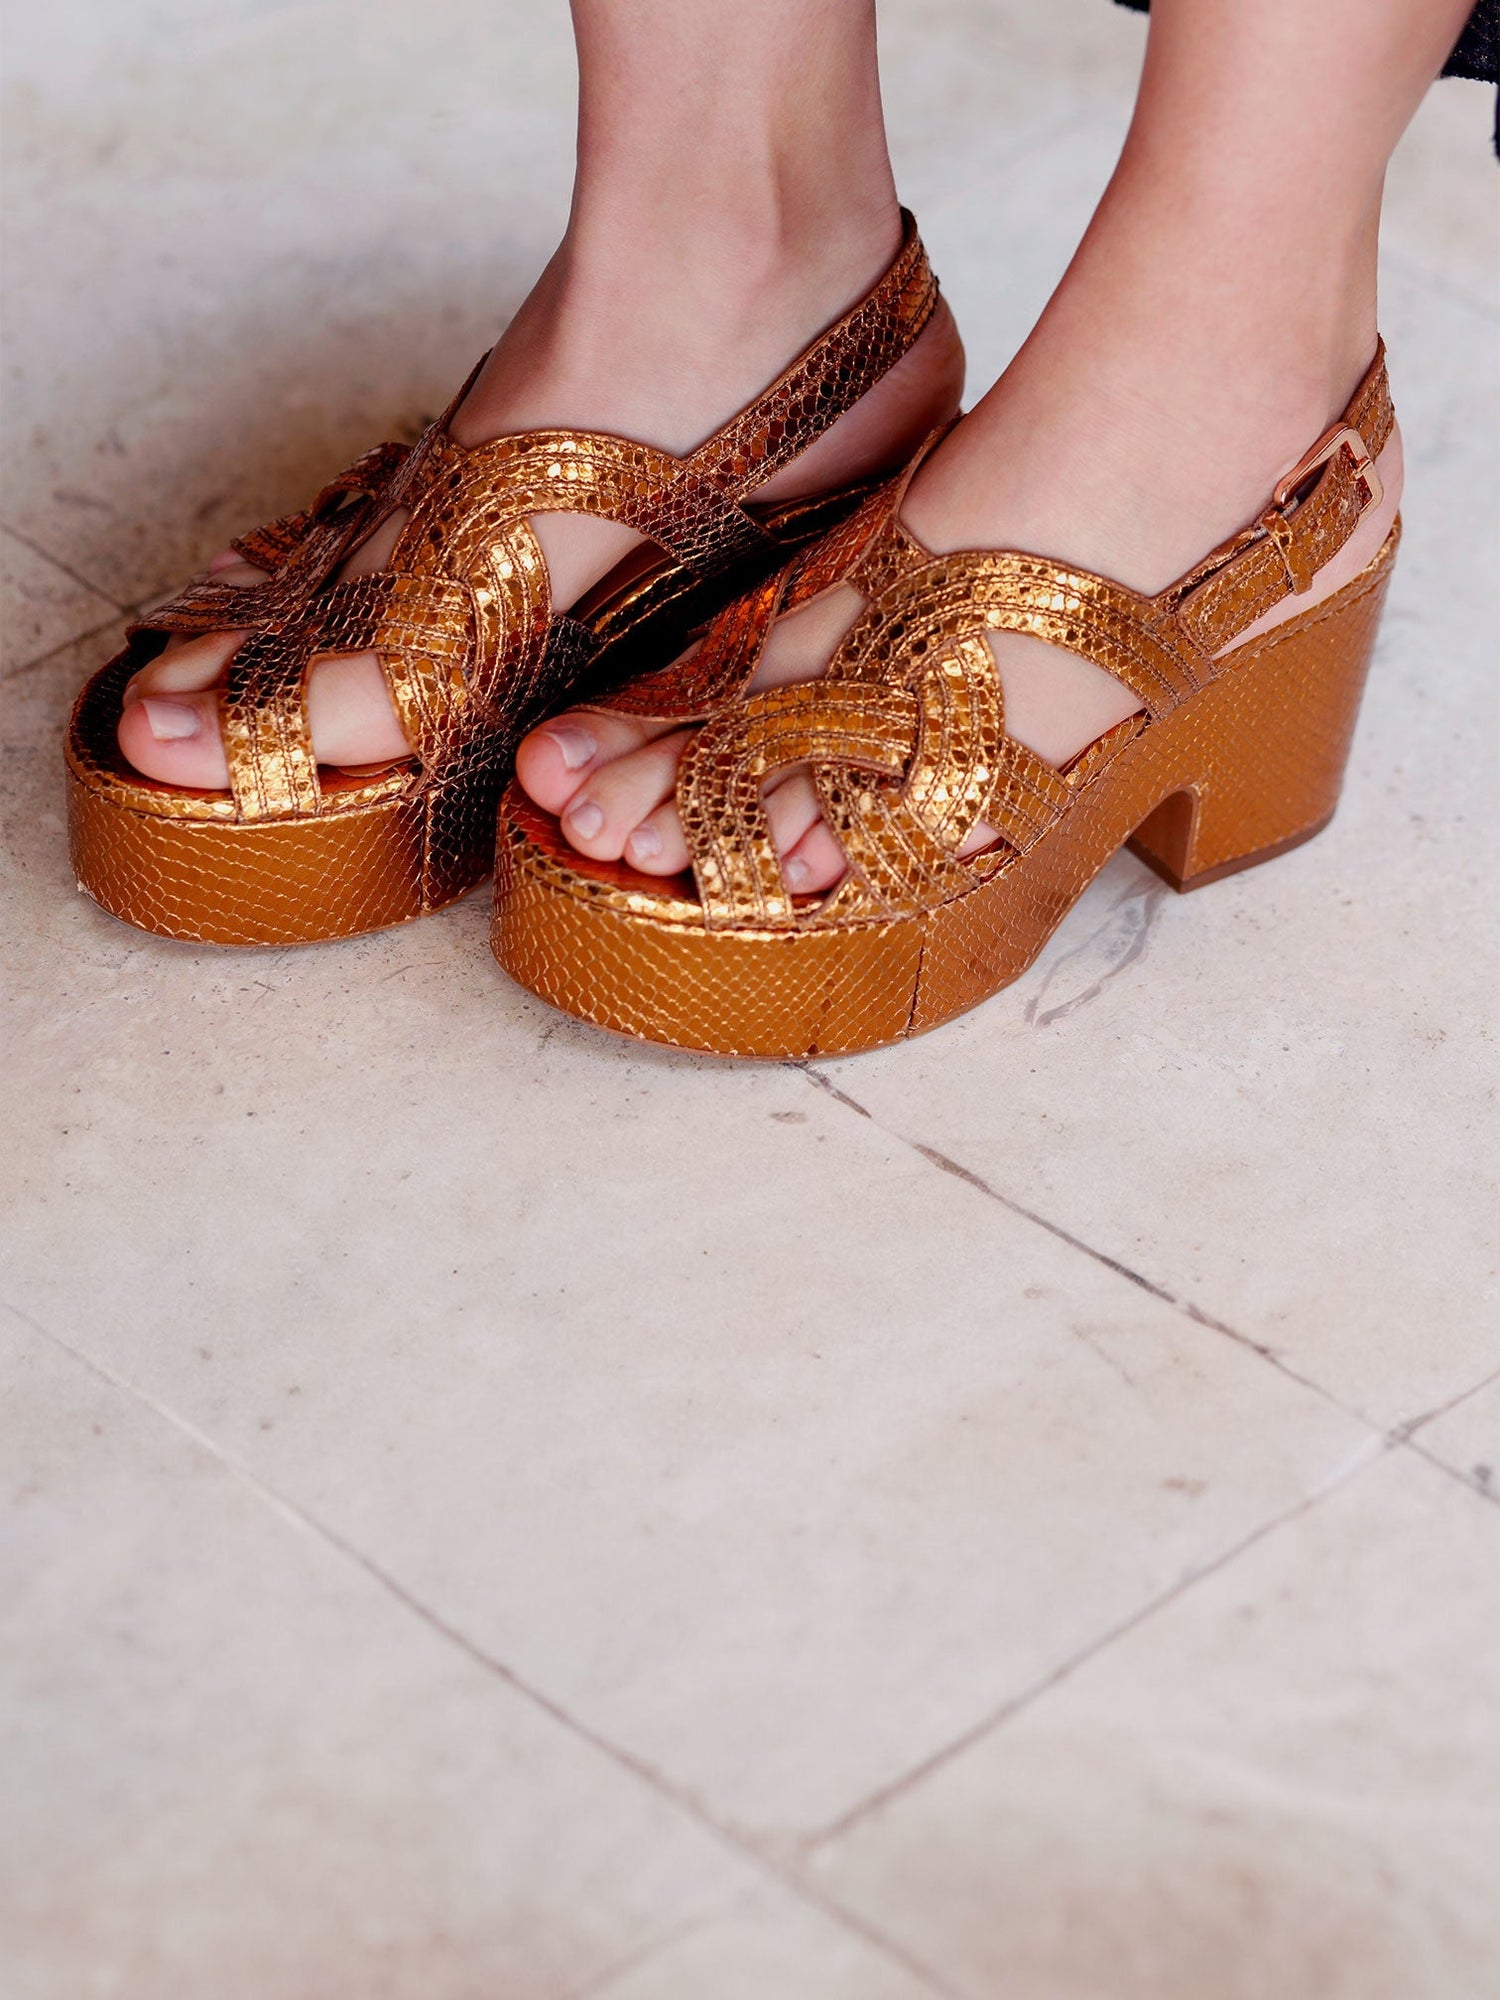 SANDALS - CHOU sandals, snake effect - Clergerie Paris - USA